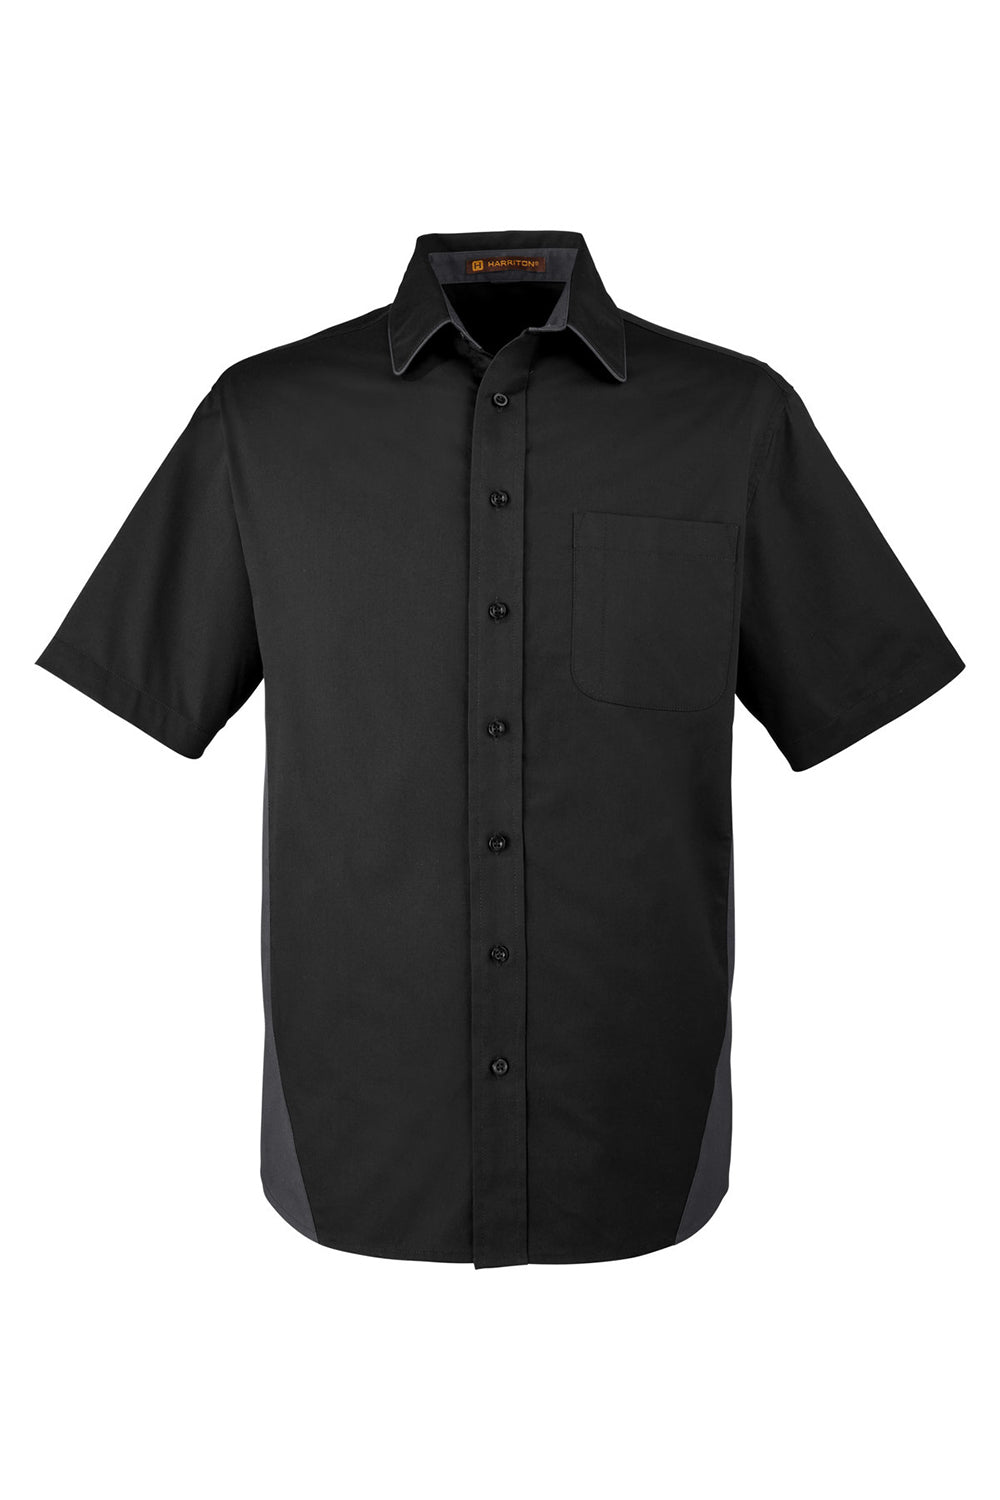 Harriton M586/M586T Mens Flash Colorblock Short Sleeve Button Down Shirt w/ Pocket Black/Dark Charcoal Grey Flat Front